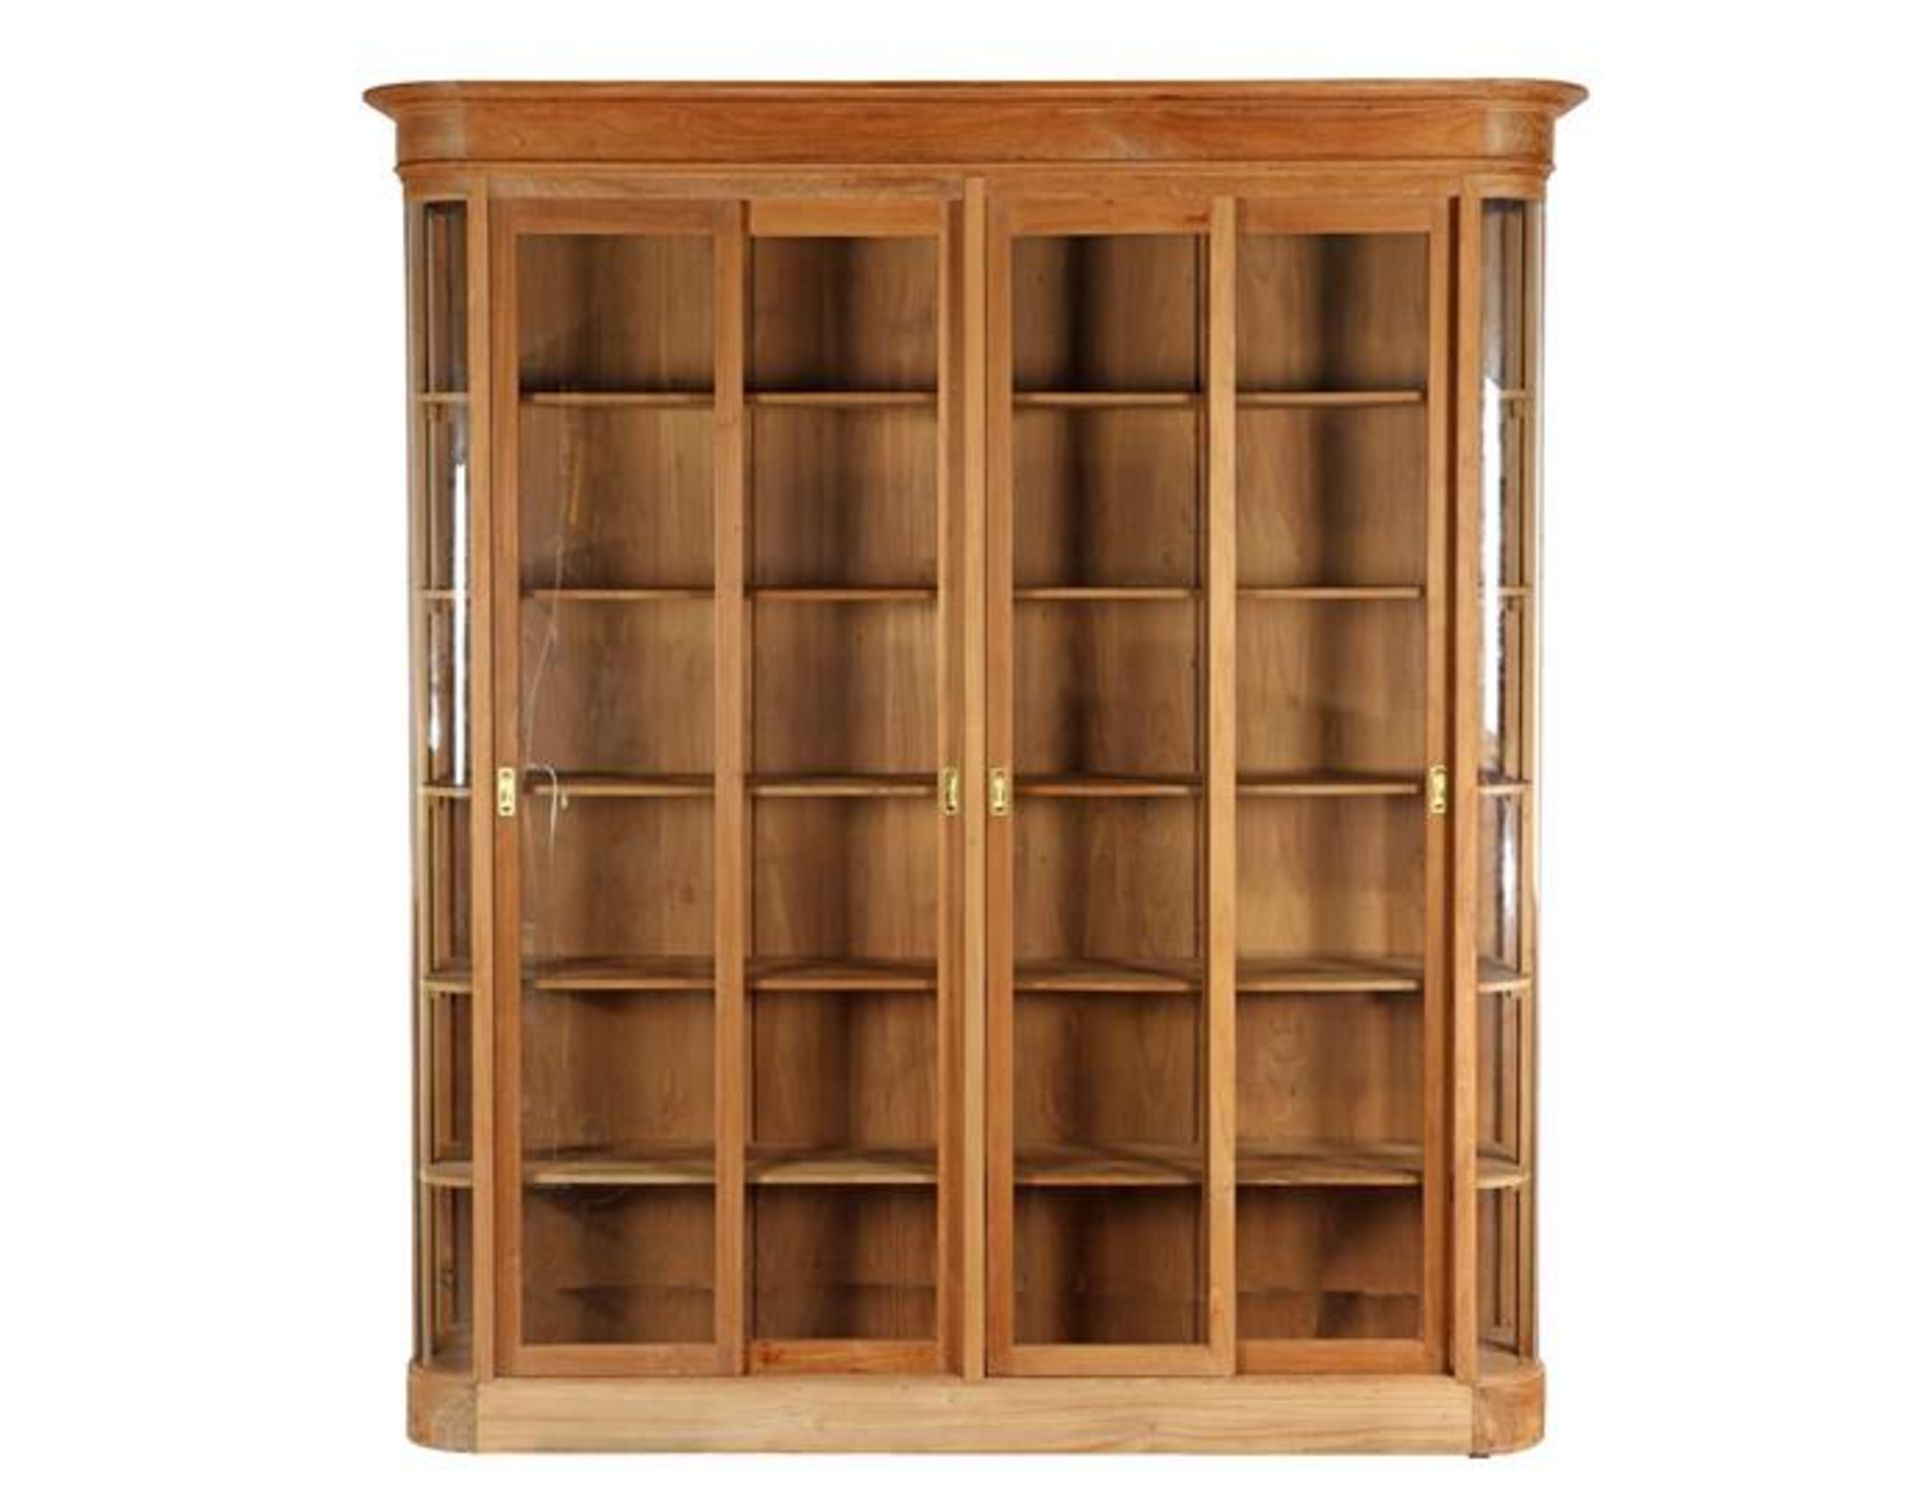 Demountable teak display cabinet with 4 sliding doors, 235 cm high, 240 cm wide, 47 cm deep